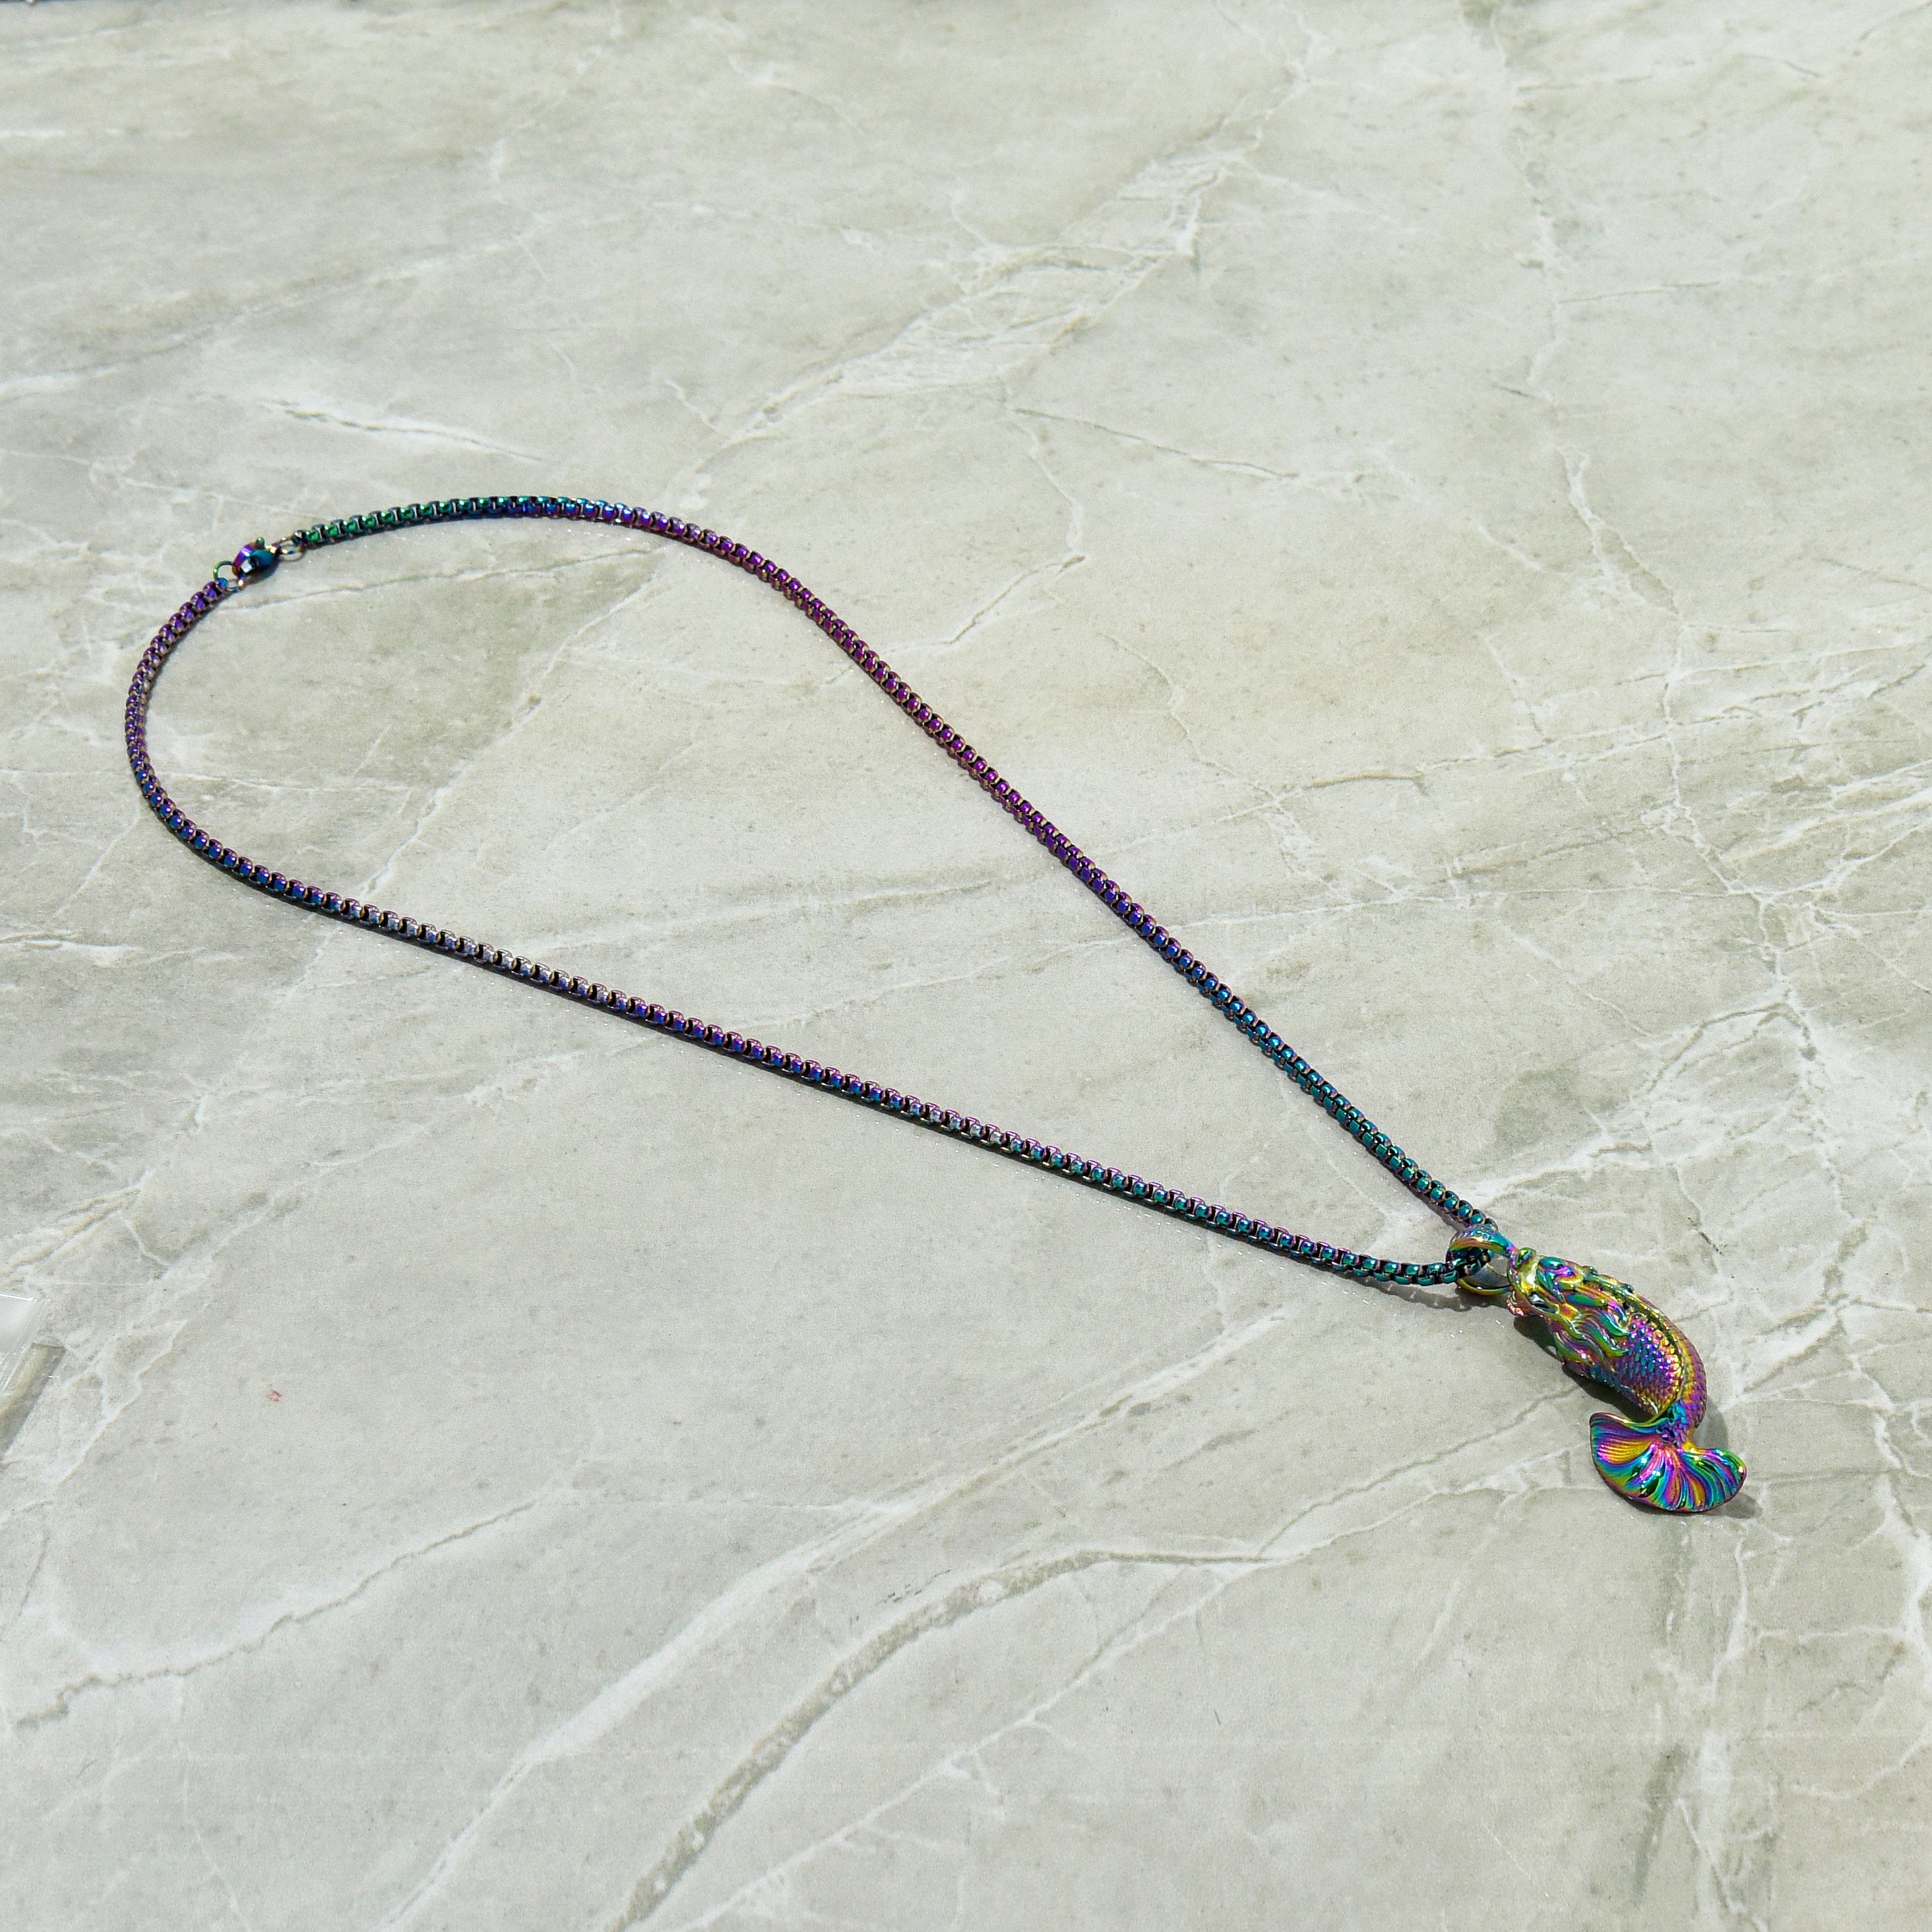 Kalifano Steel Hearts Jewelry Aurora Borealis Carp Fish Steel Hearts Necklace SHN507-AB